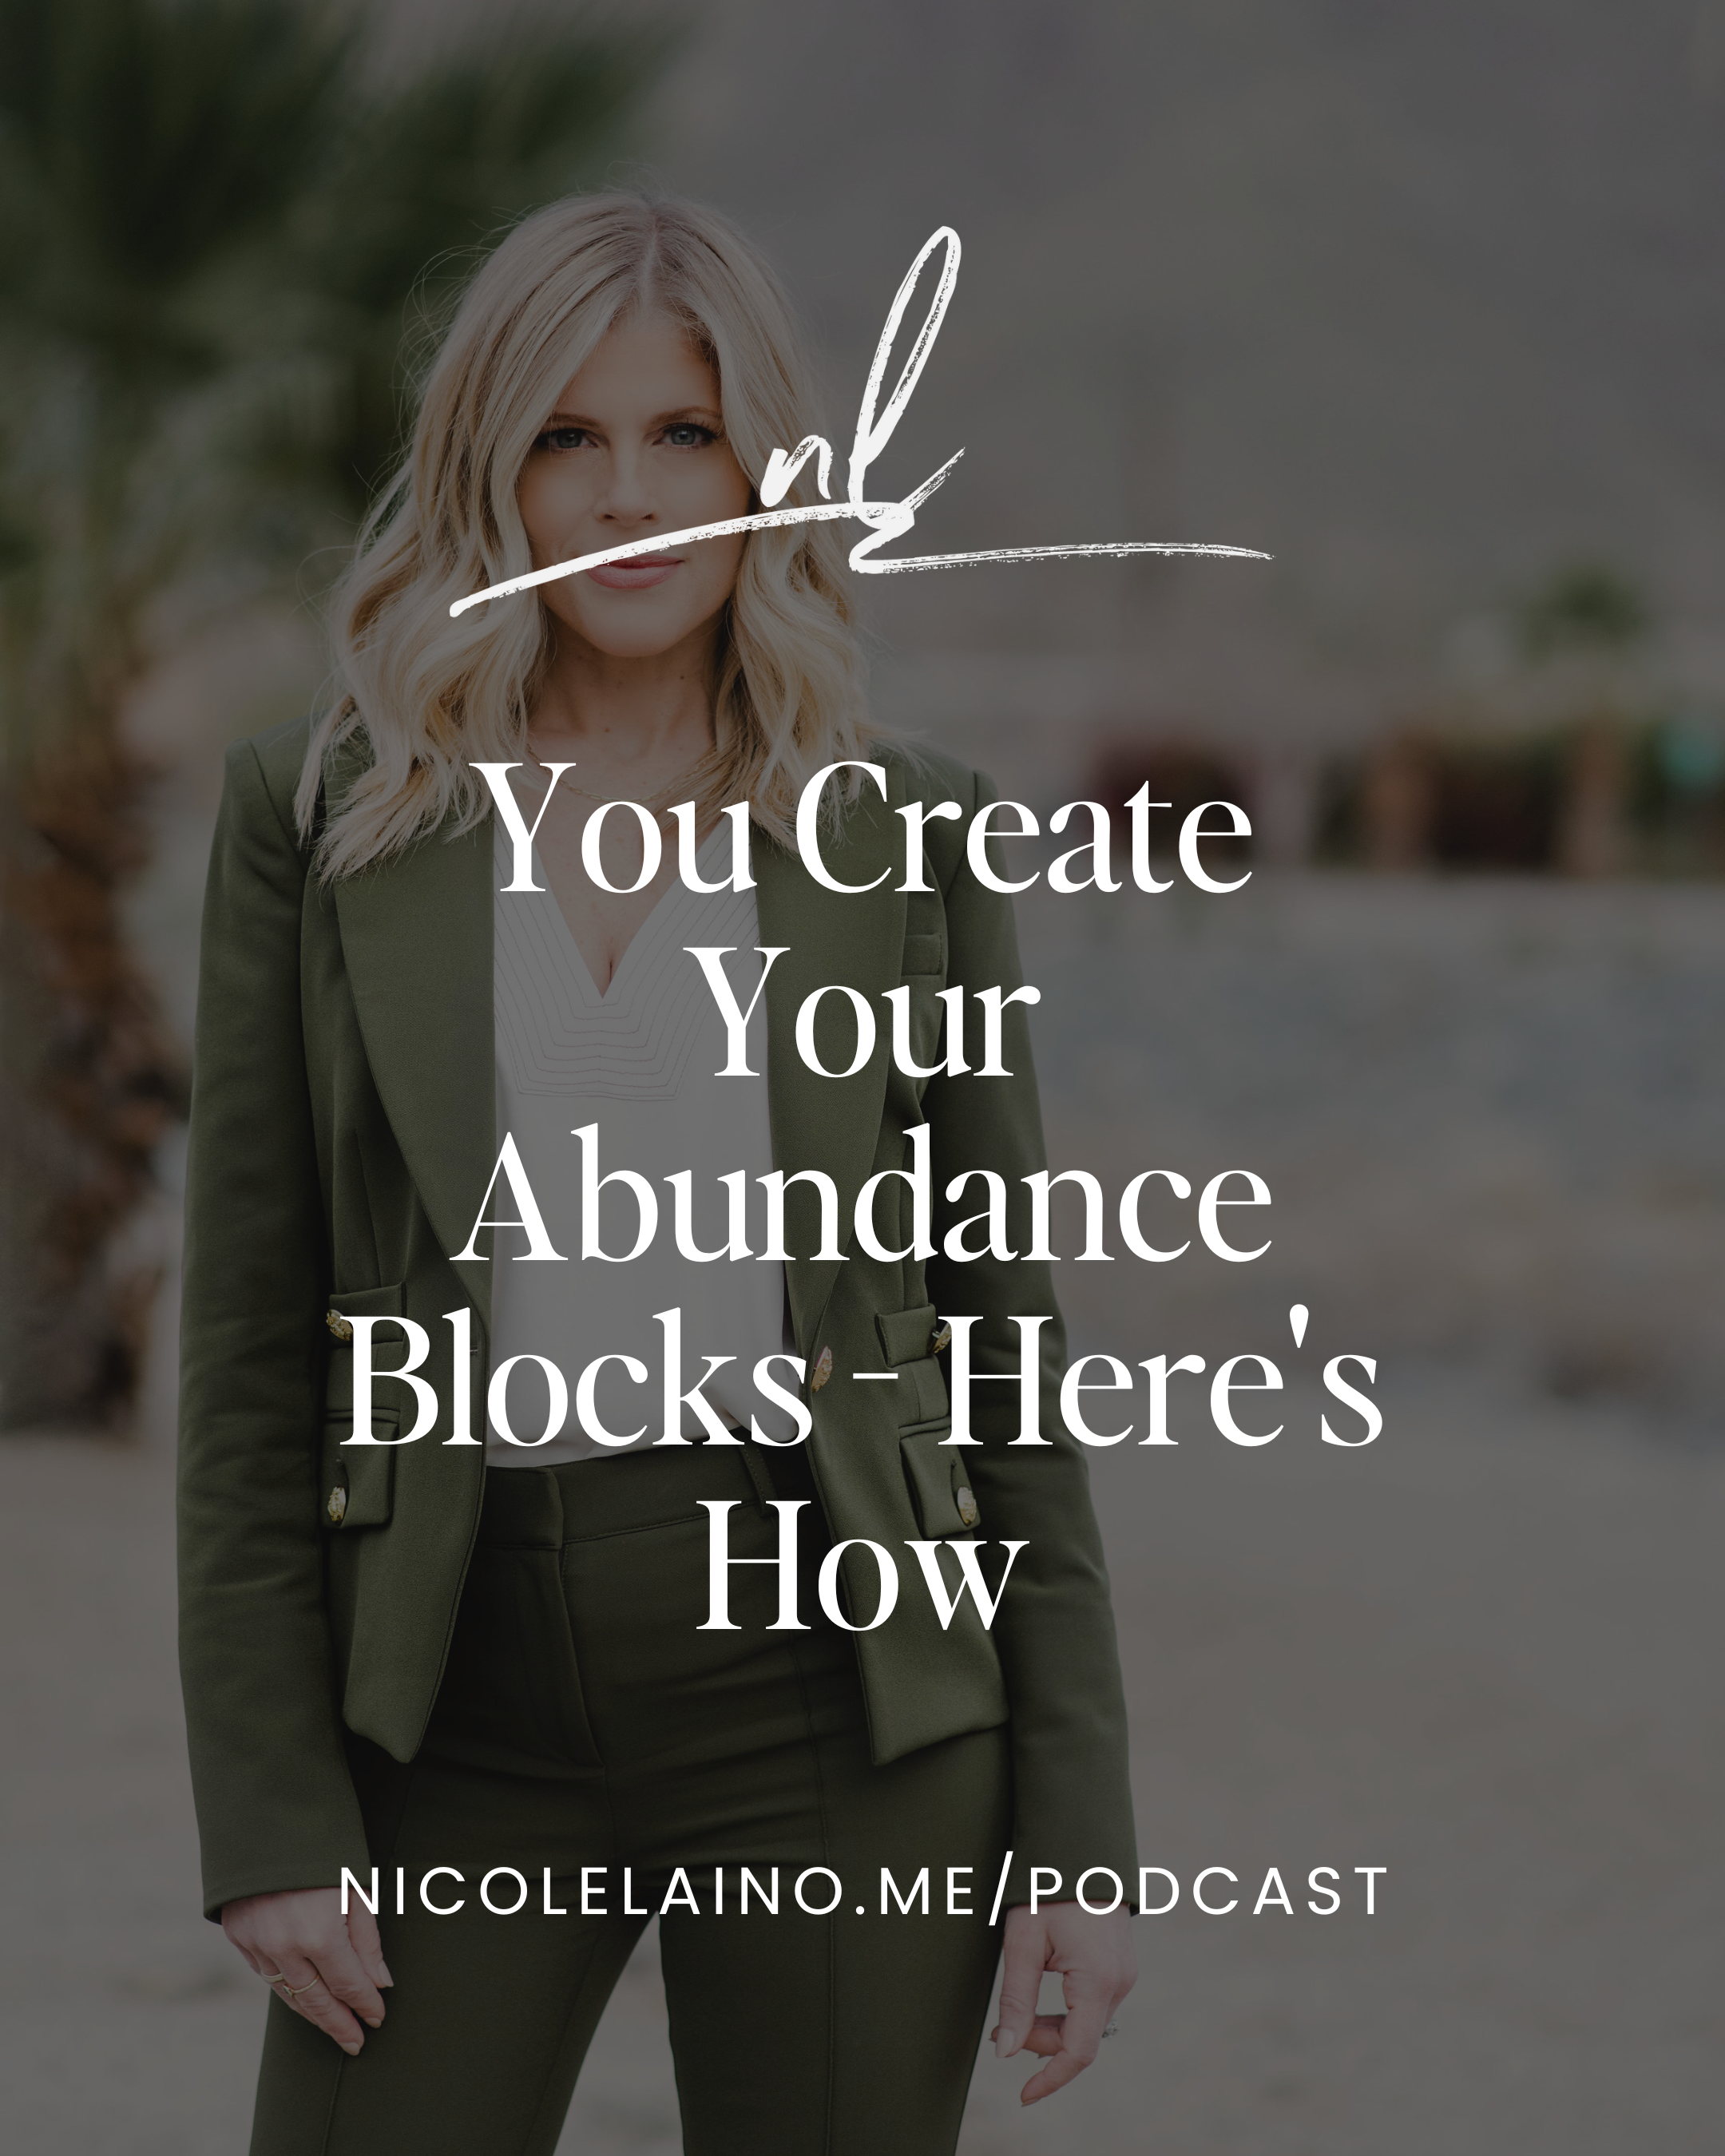 You Create Your Abundance Blocks - Here's How